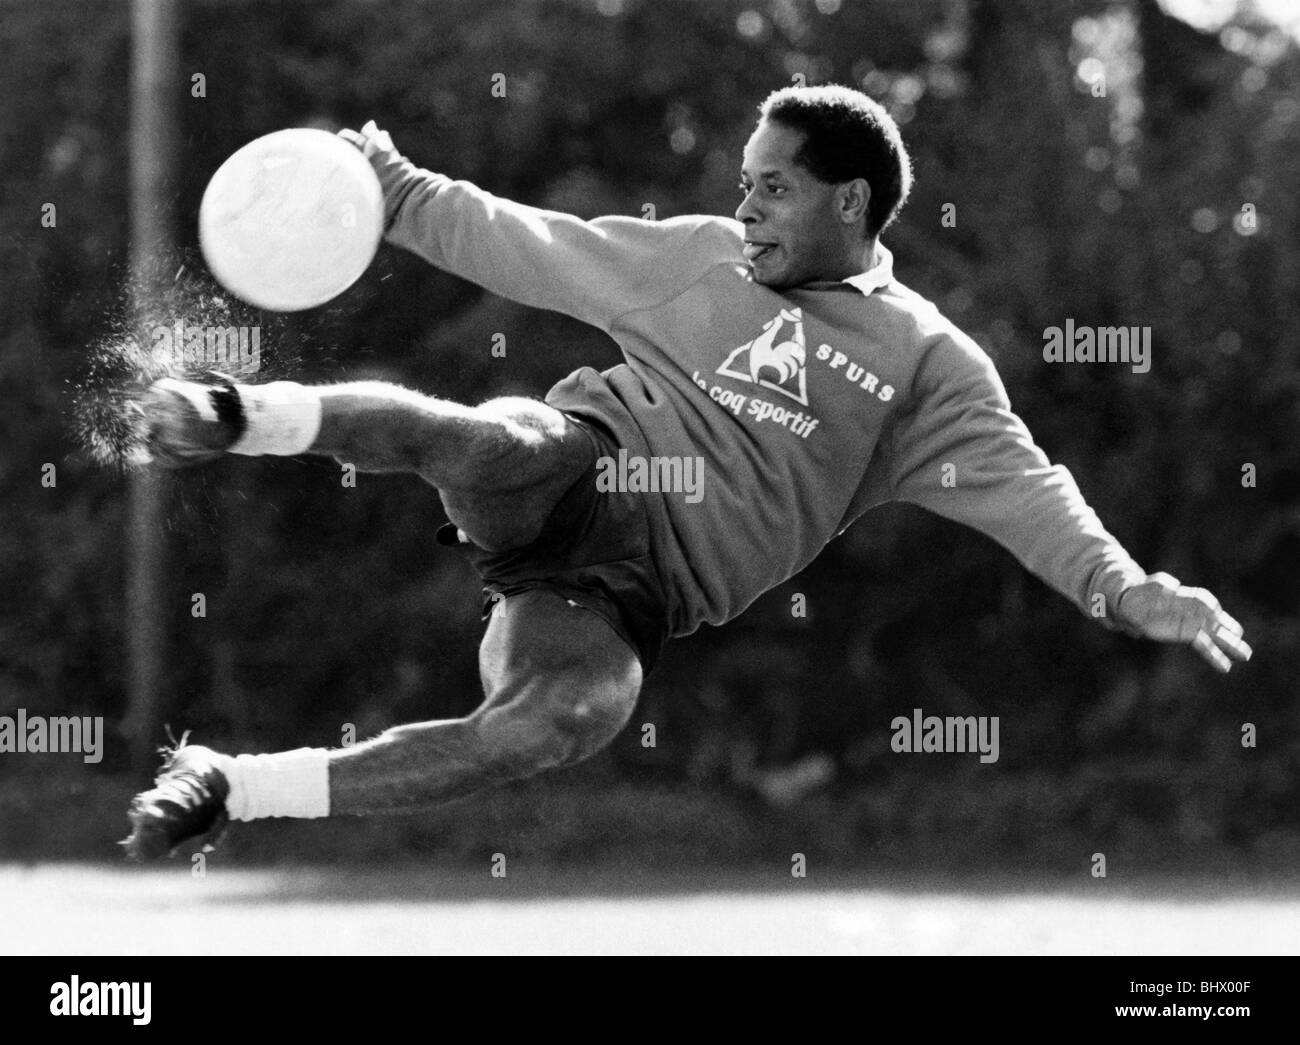 Tottenham Hotspur player John Chiedozie performs a spectacular scissors kick in training.  October 1984  P026430 Stock Photo